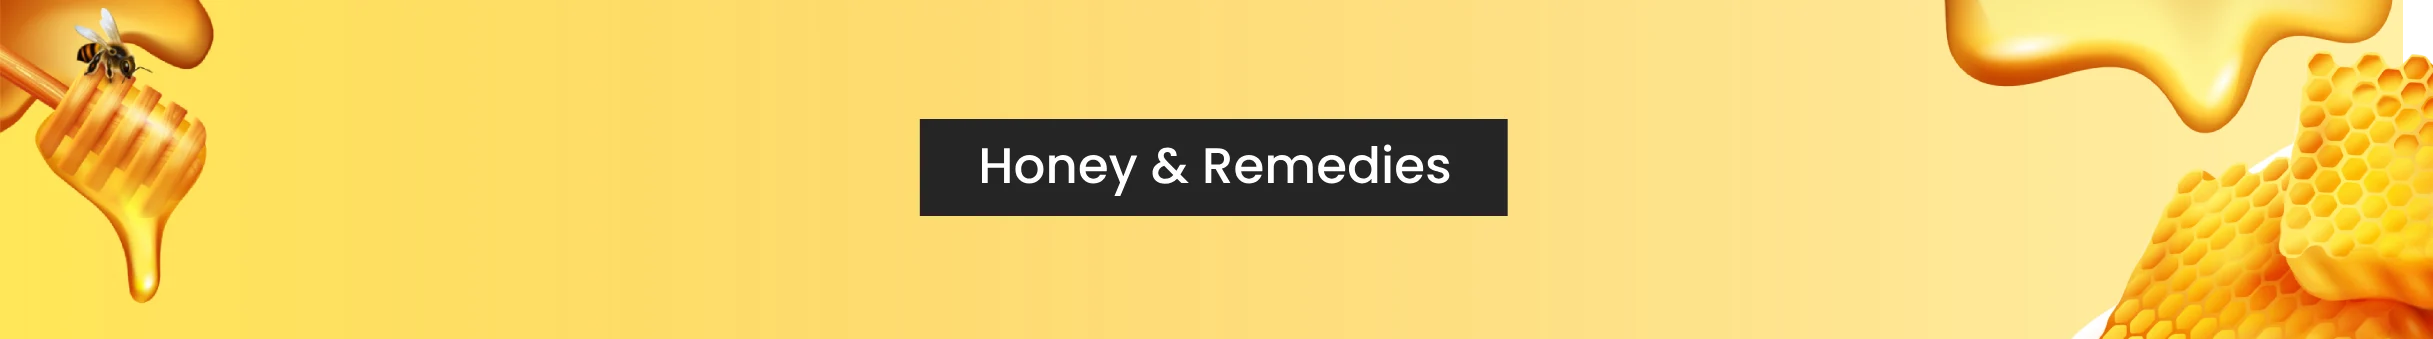 Honey & Remedies